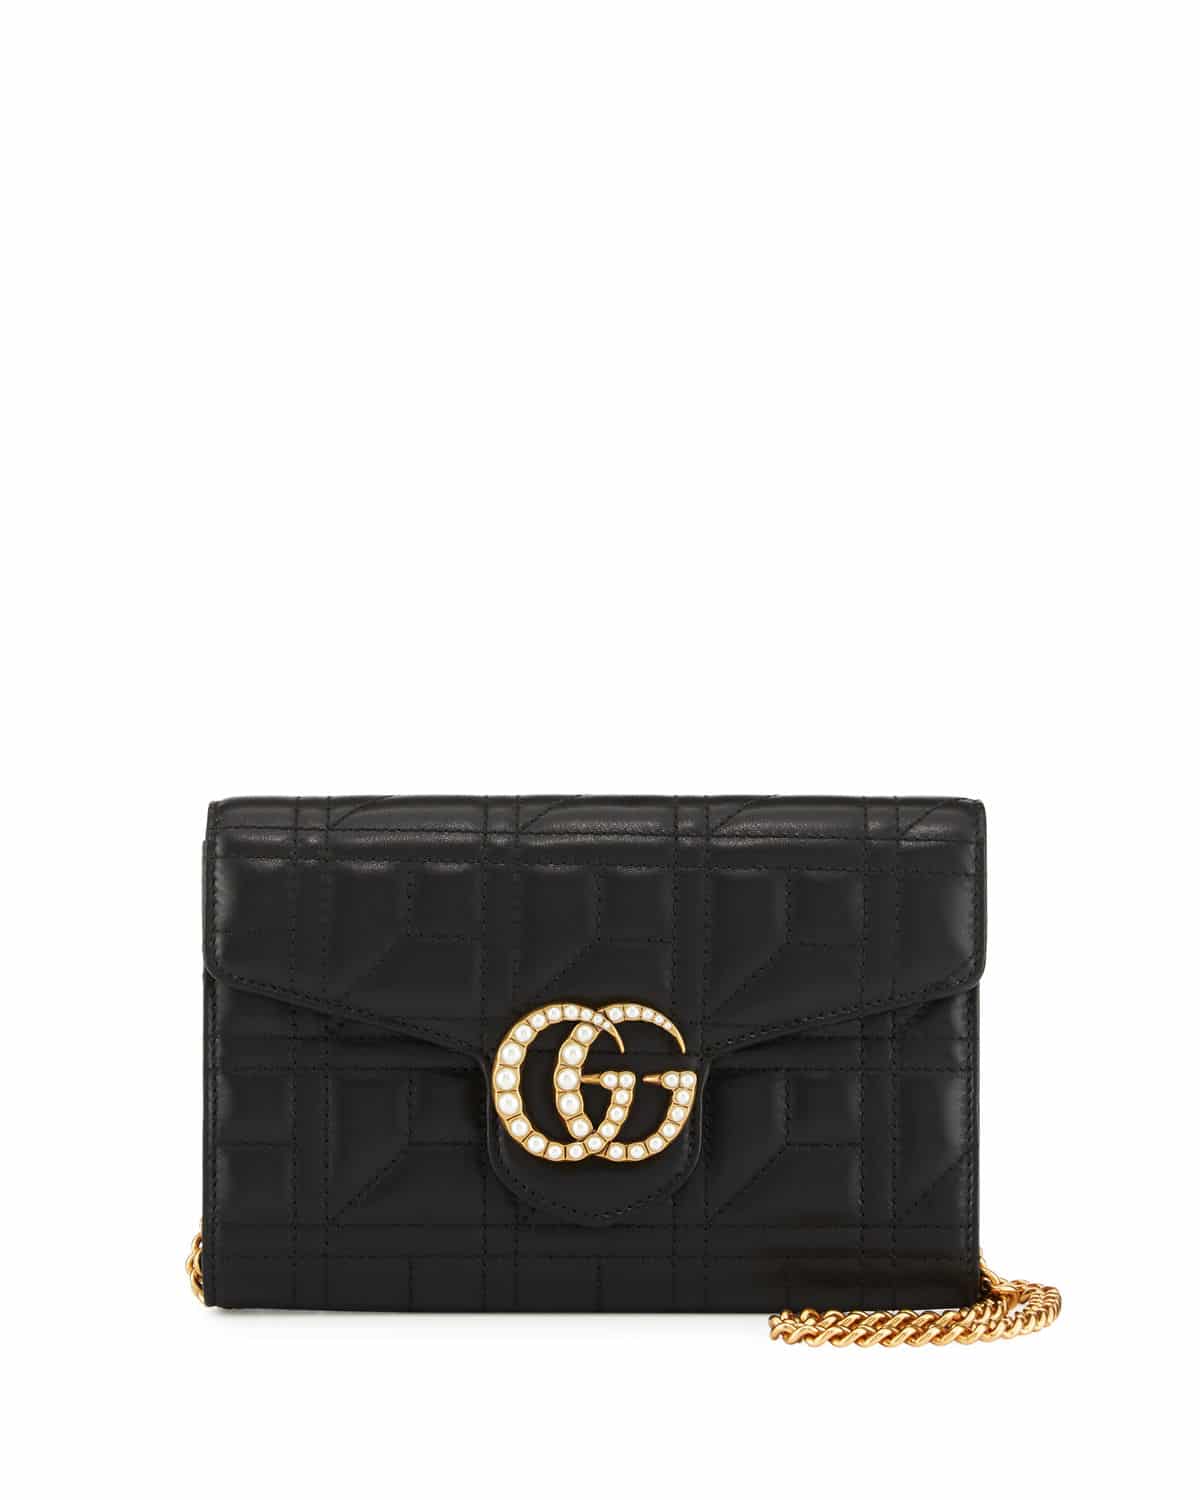 Gucci Marmont Matelasse Chain Wallet | semashow.com